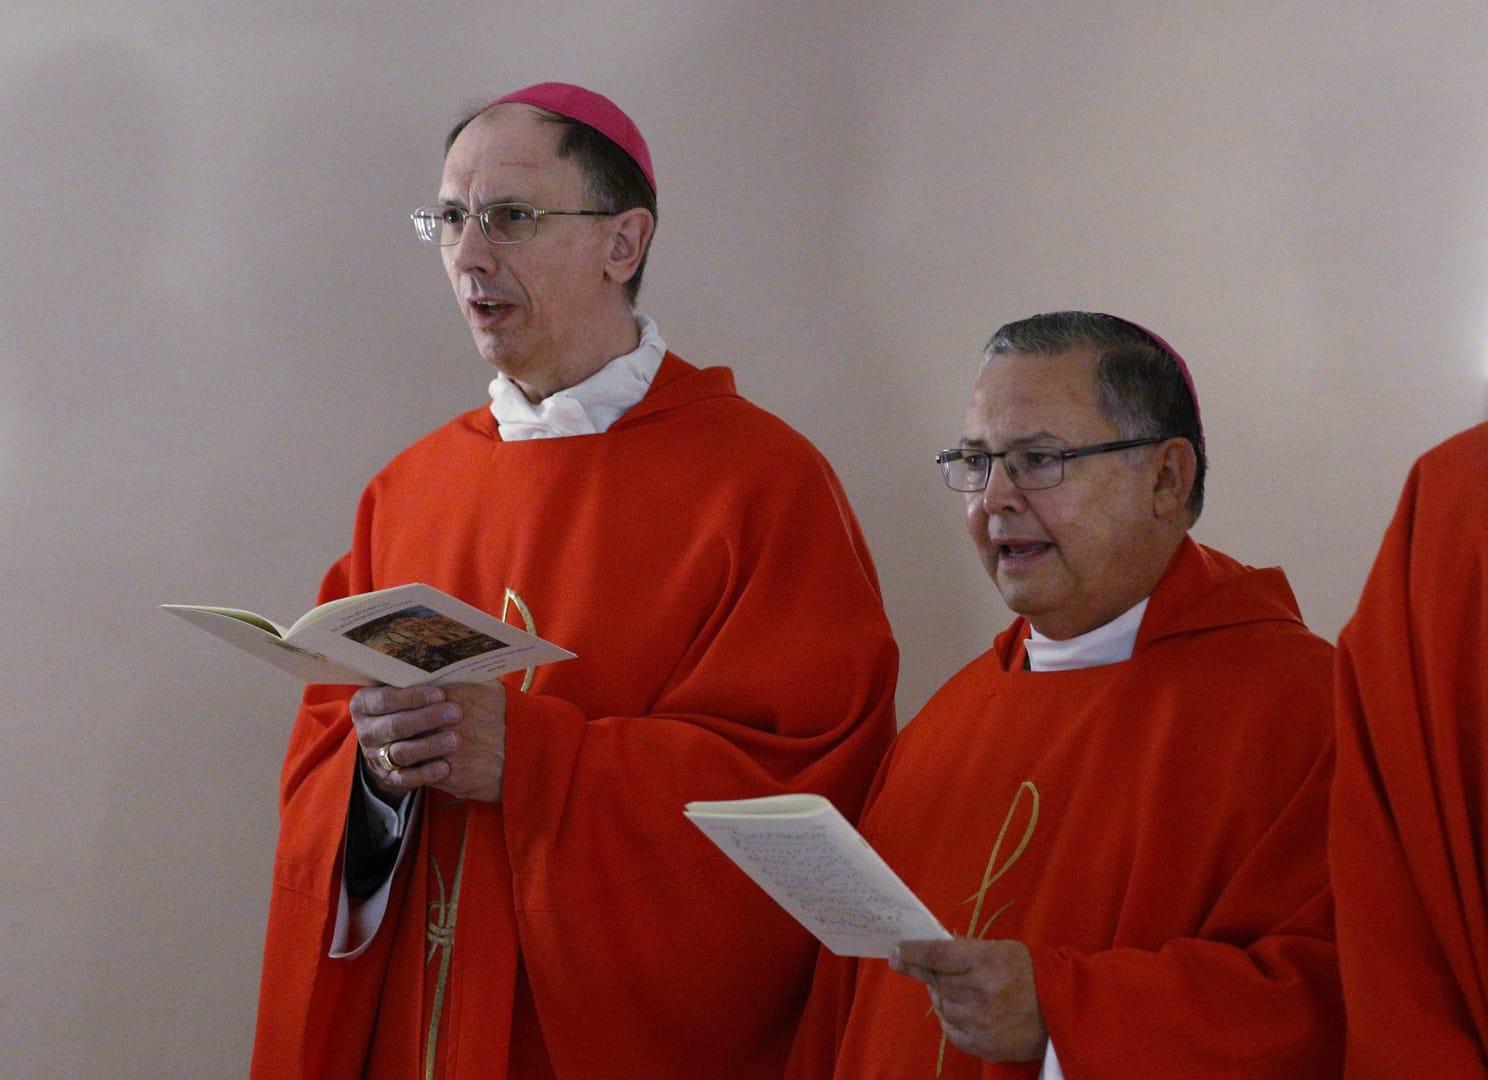 Amid intense division in U.S., God calls us to love, says Arizona bishop